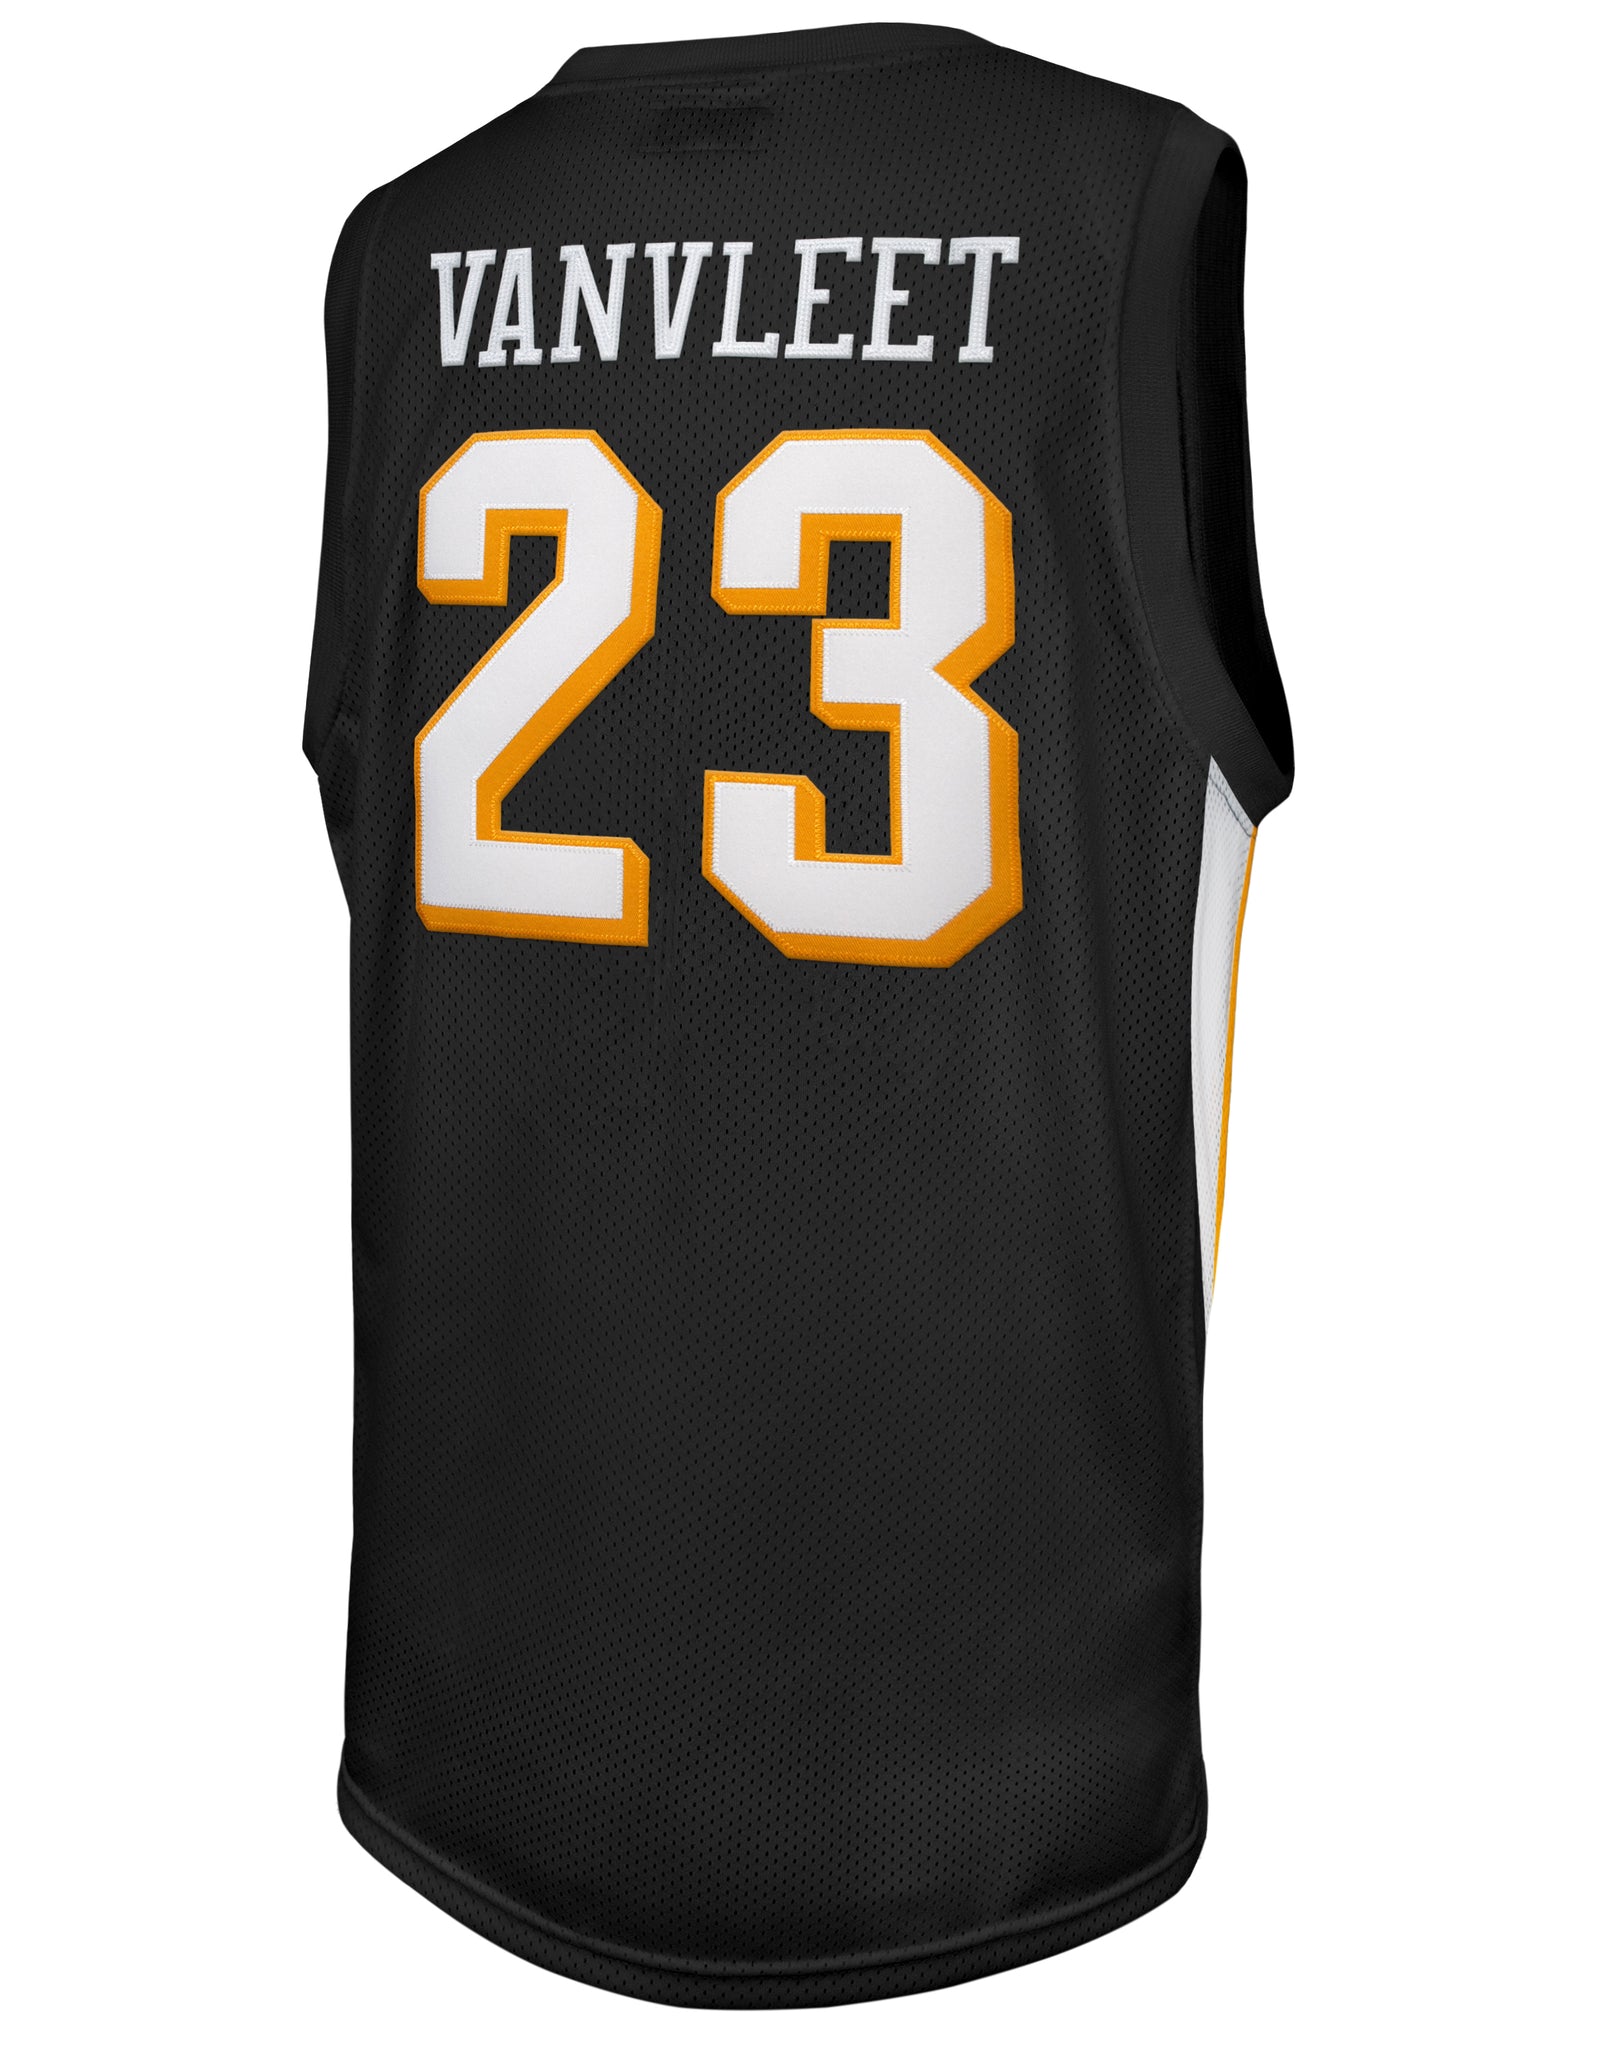 Fred VanVleet's jersey number retired by Auburn